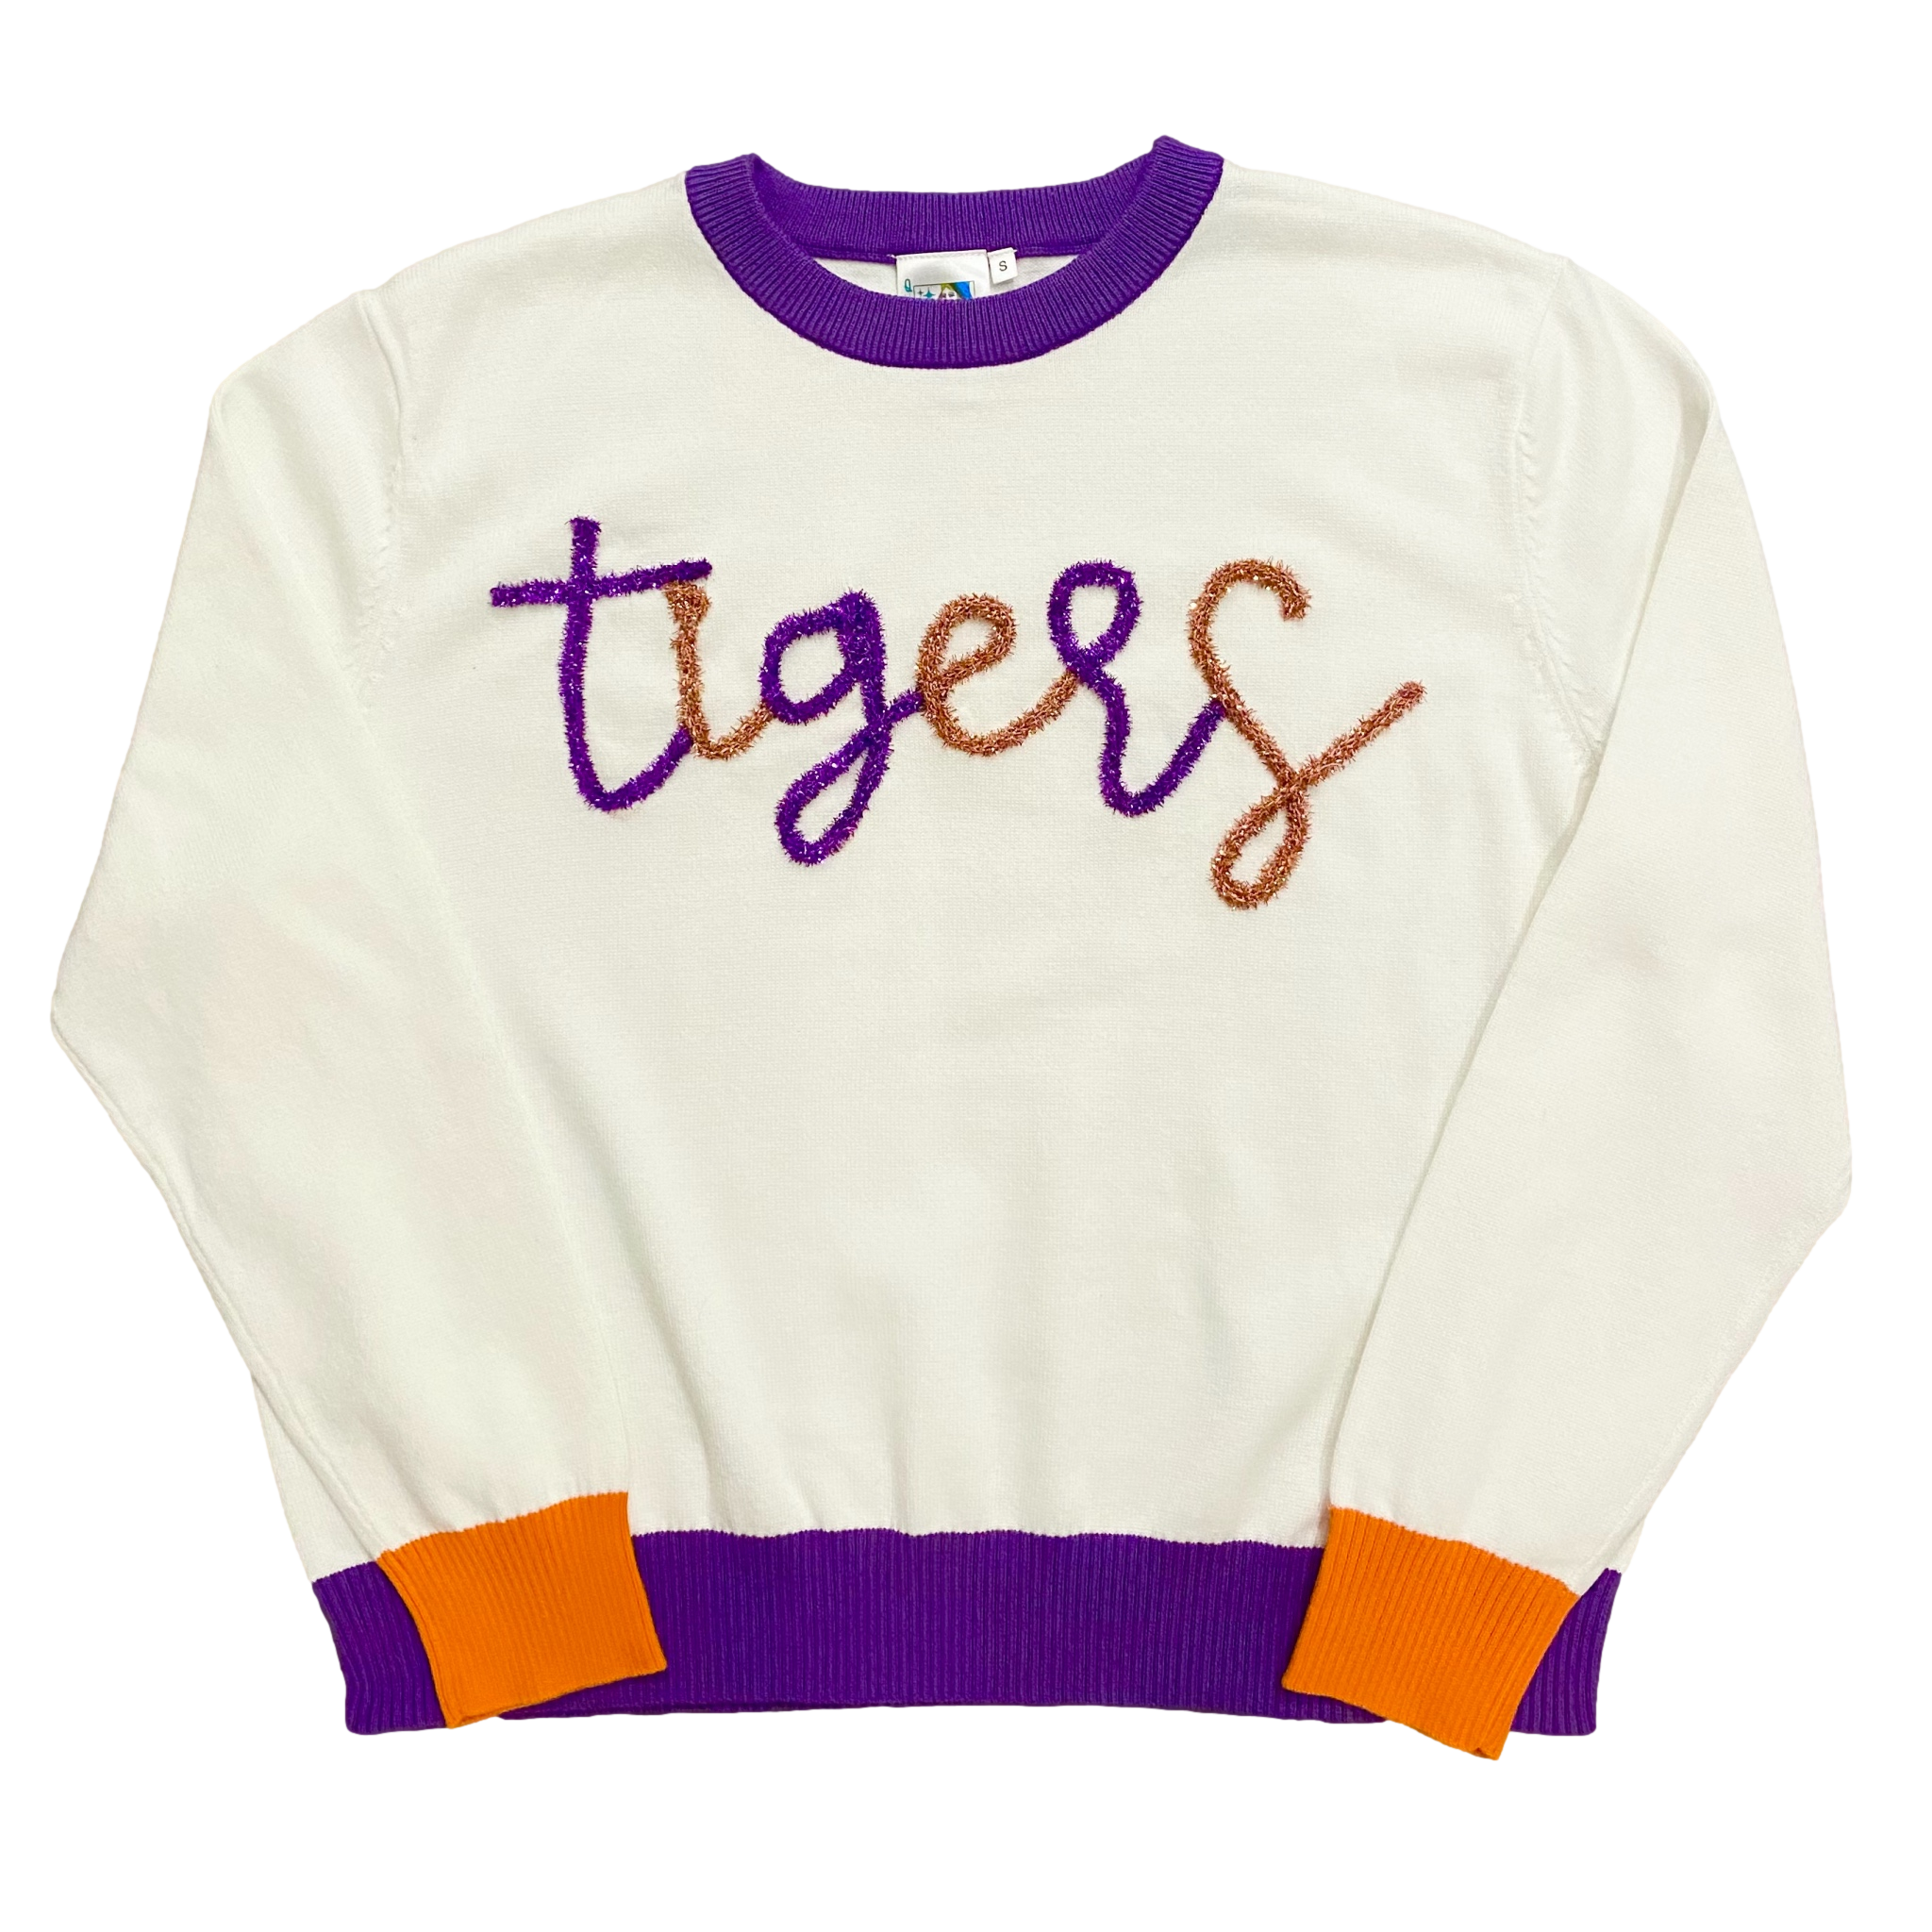 White w/ Purple & Orange "Tigers" LS Sweater - Licensed